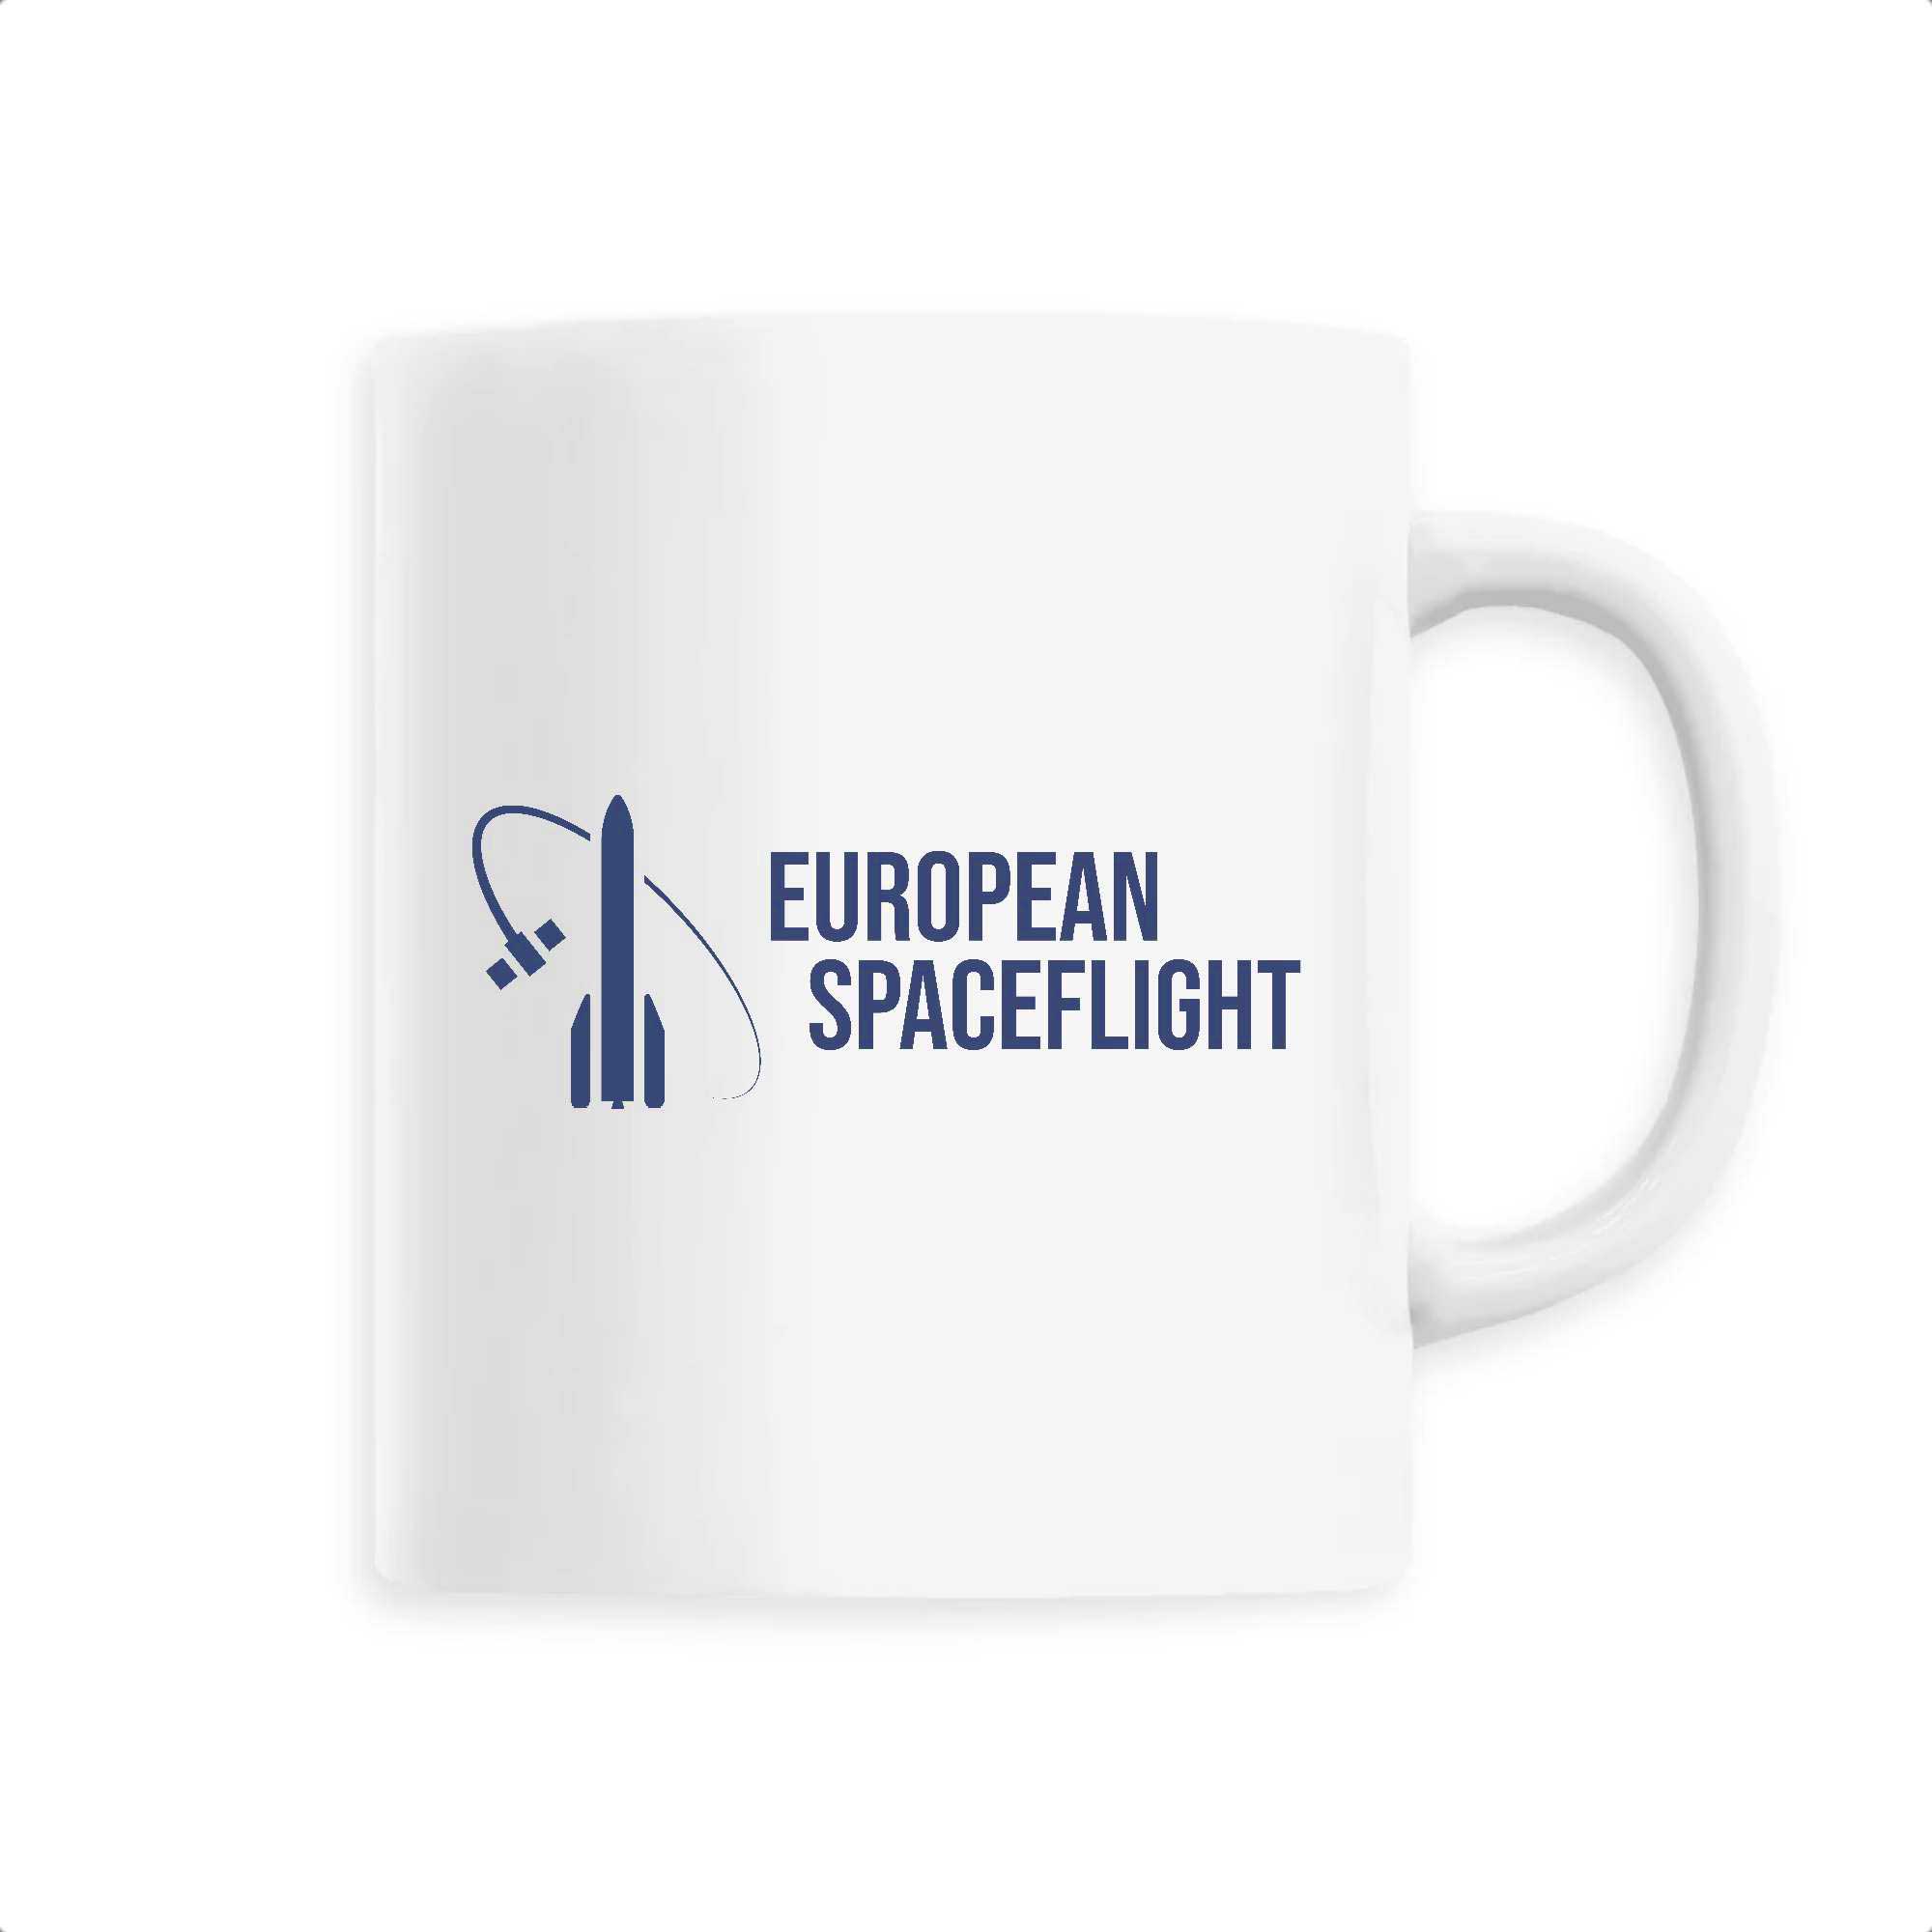 European Spaceflight Merch: European Spaceflight Mug.